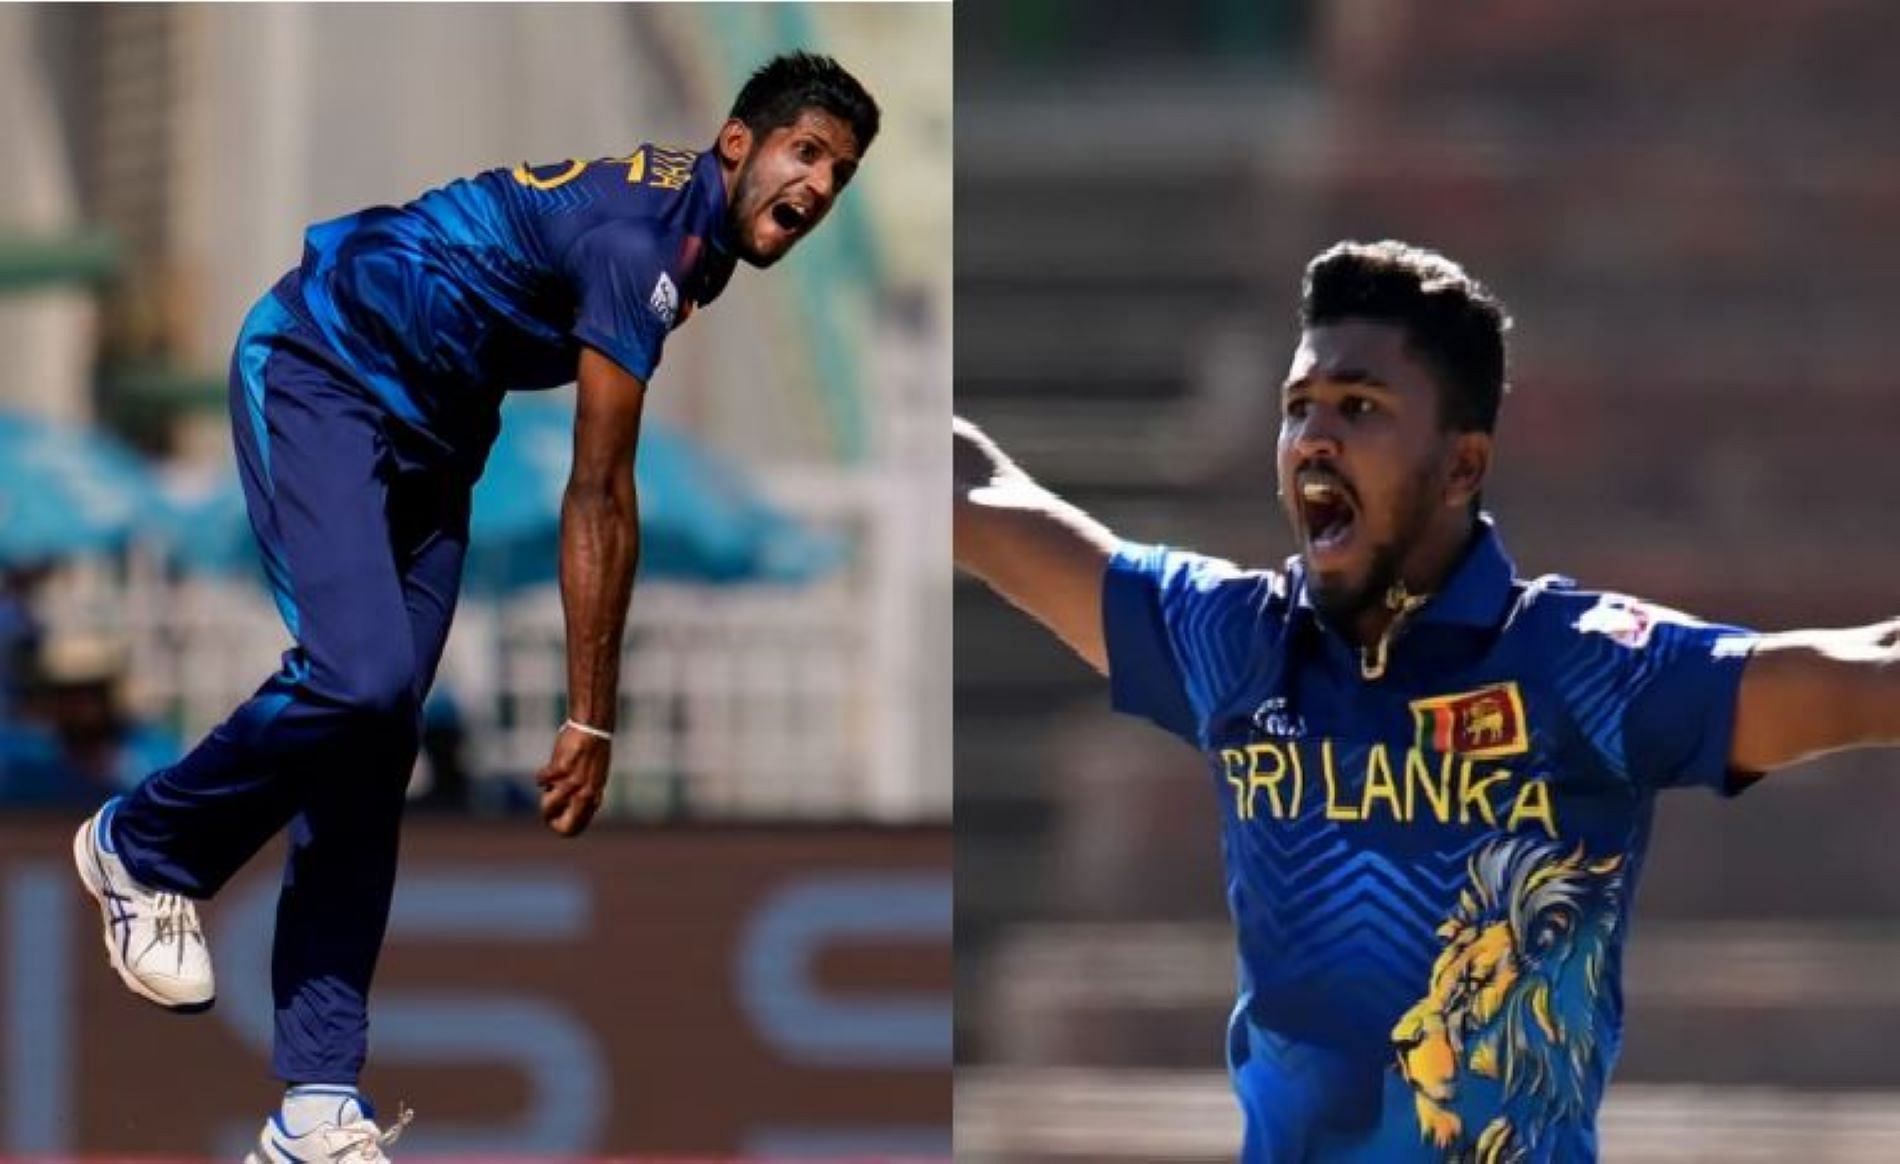 Rajitha and Madushanka have led the Sri Lankan attack manfully.